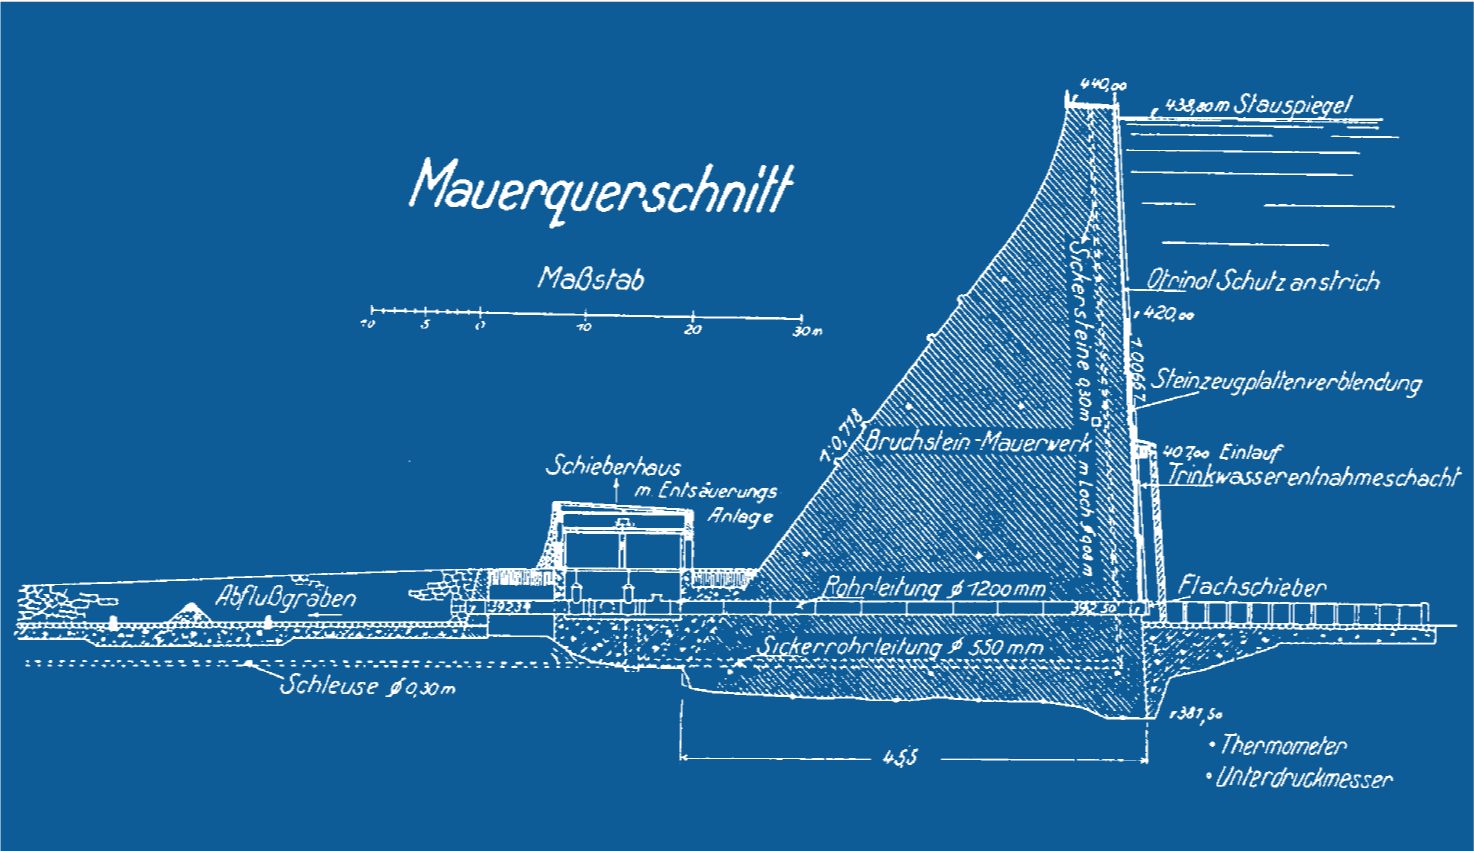 Mauerquerschnitt der Talsperre Saidenbach